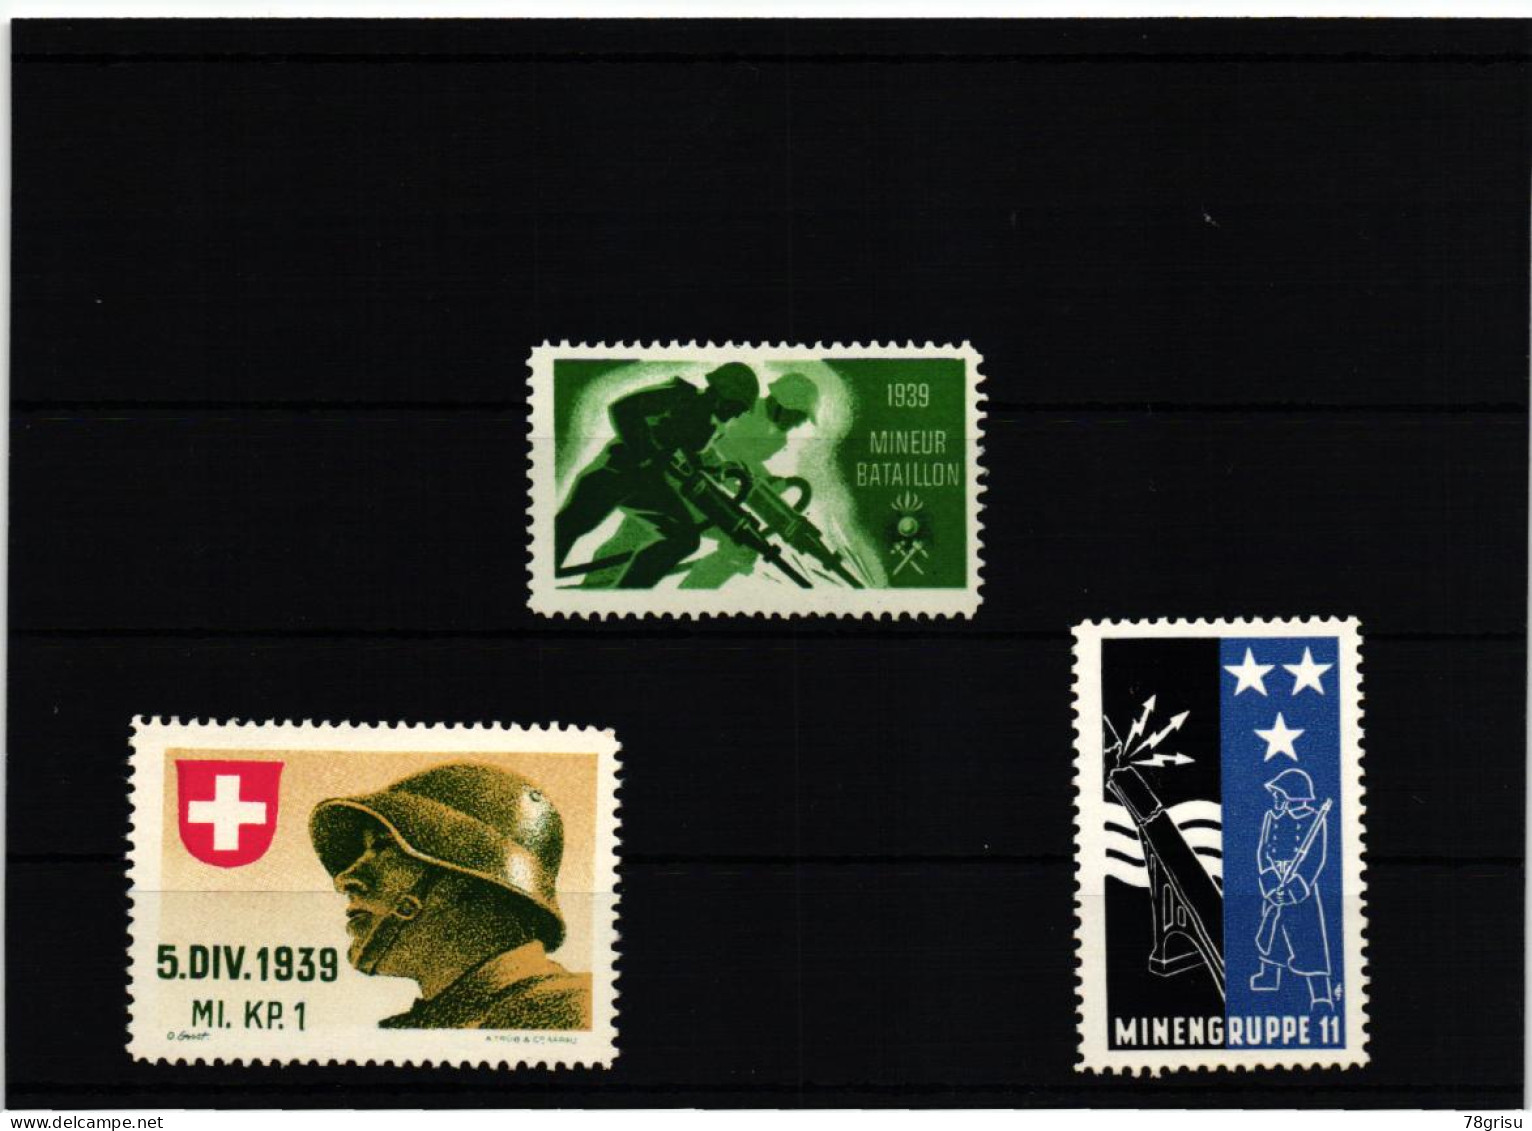 Schweiz Soldatenmarken, MINIEUR BATAILLON; MINENGRUPPE; MI. KP. 1939 - Viñetas